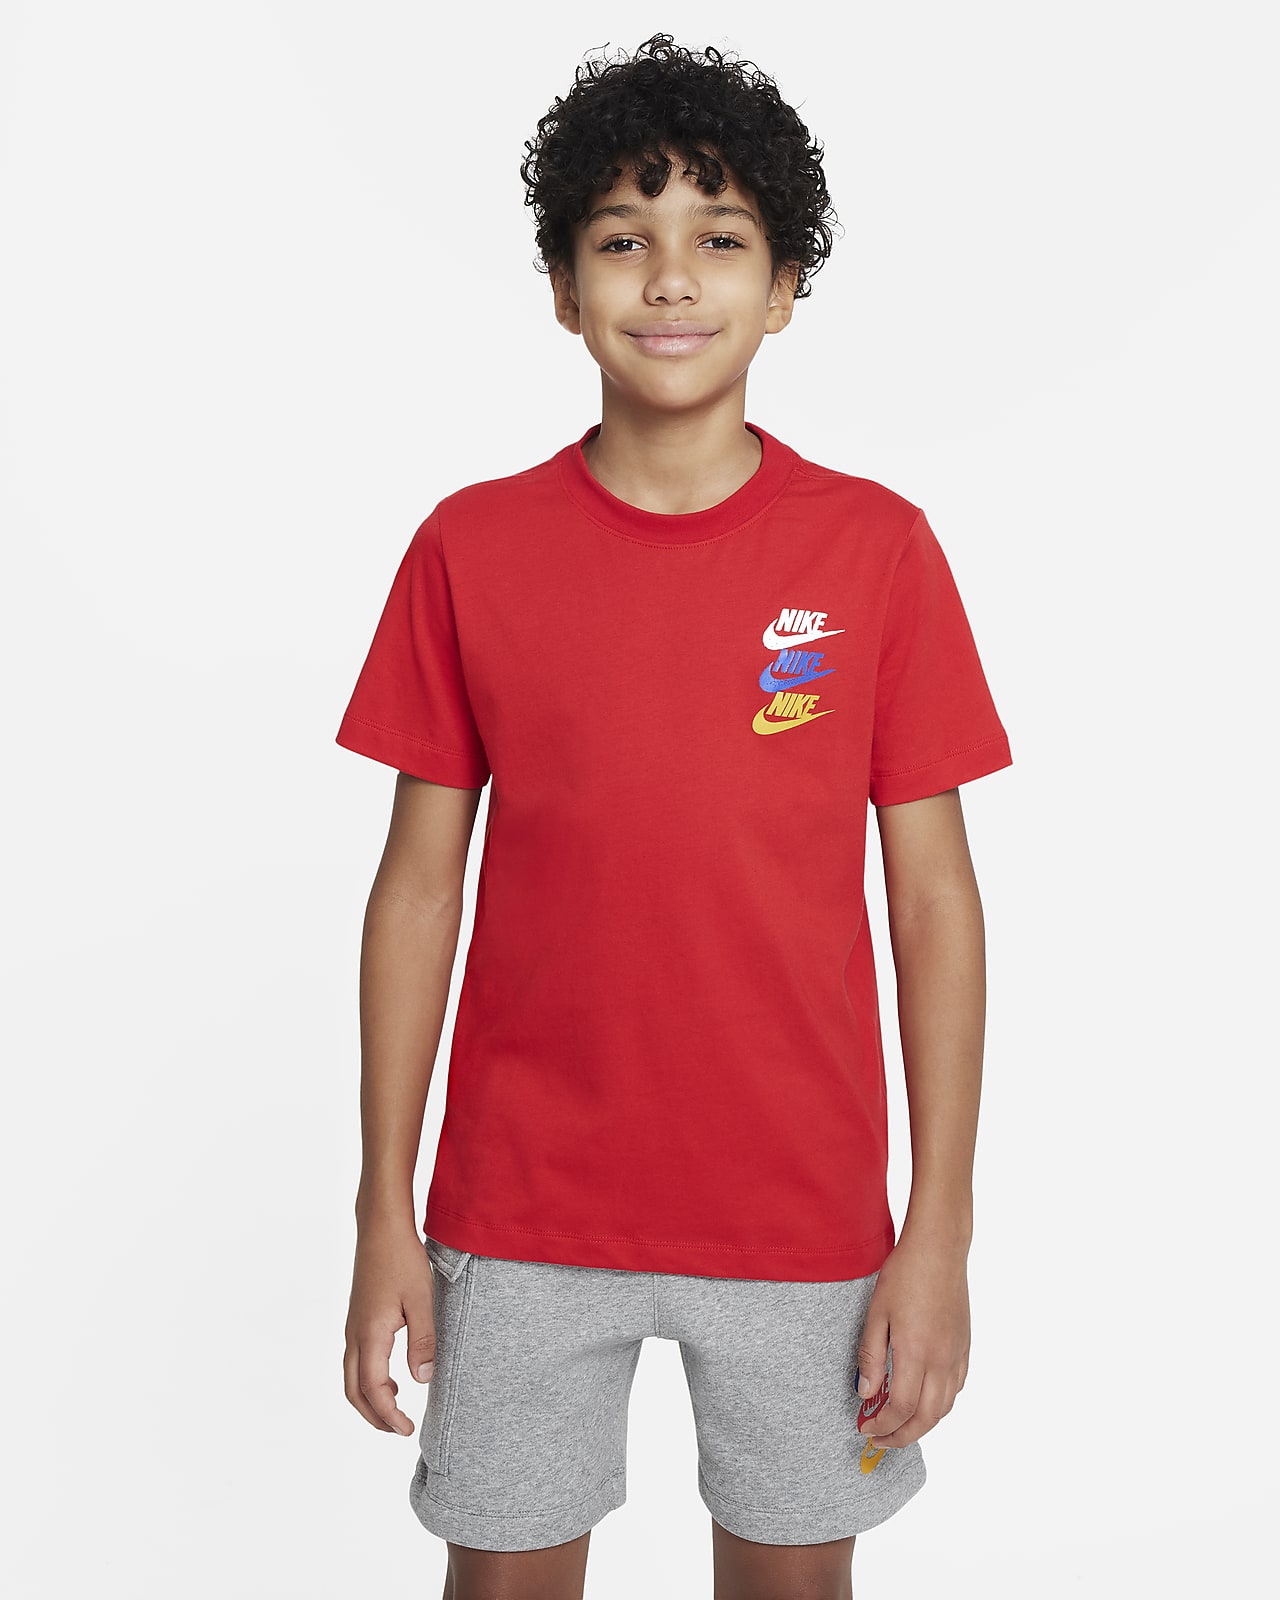 T-shirt Nike Sportswear Standard Issue för ungdom (killar)